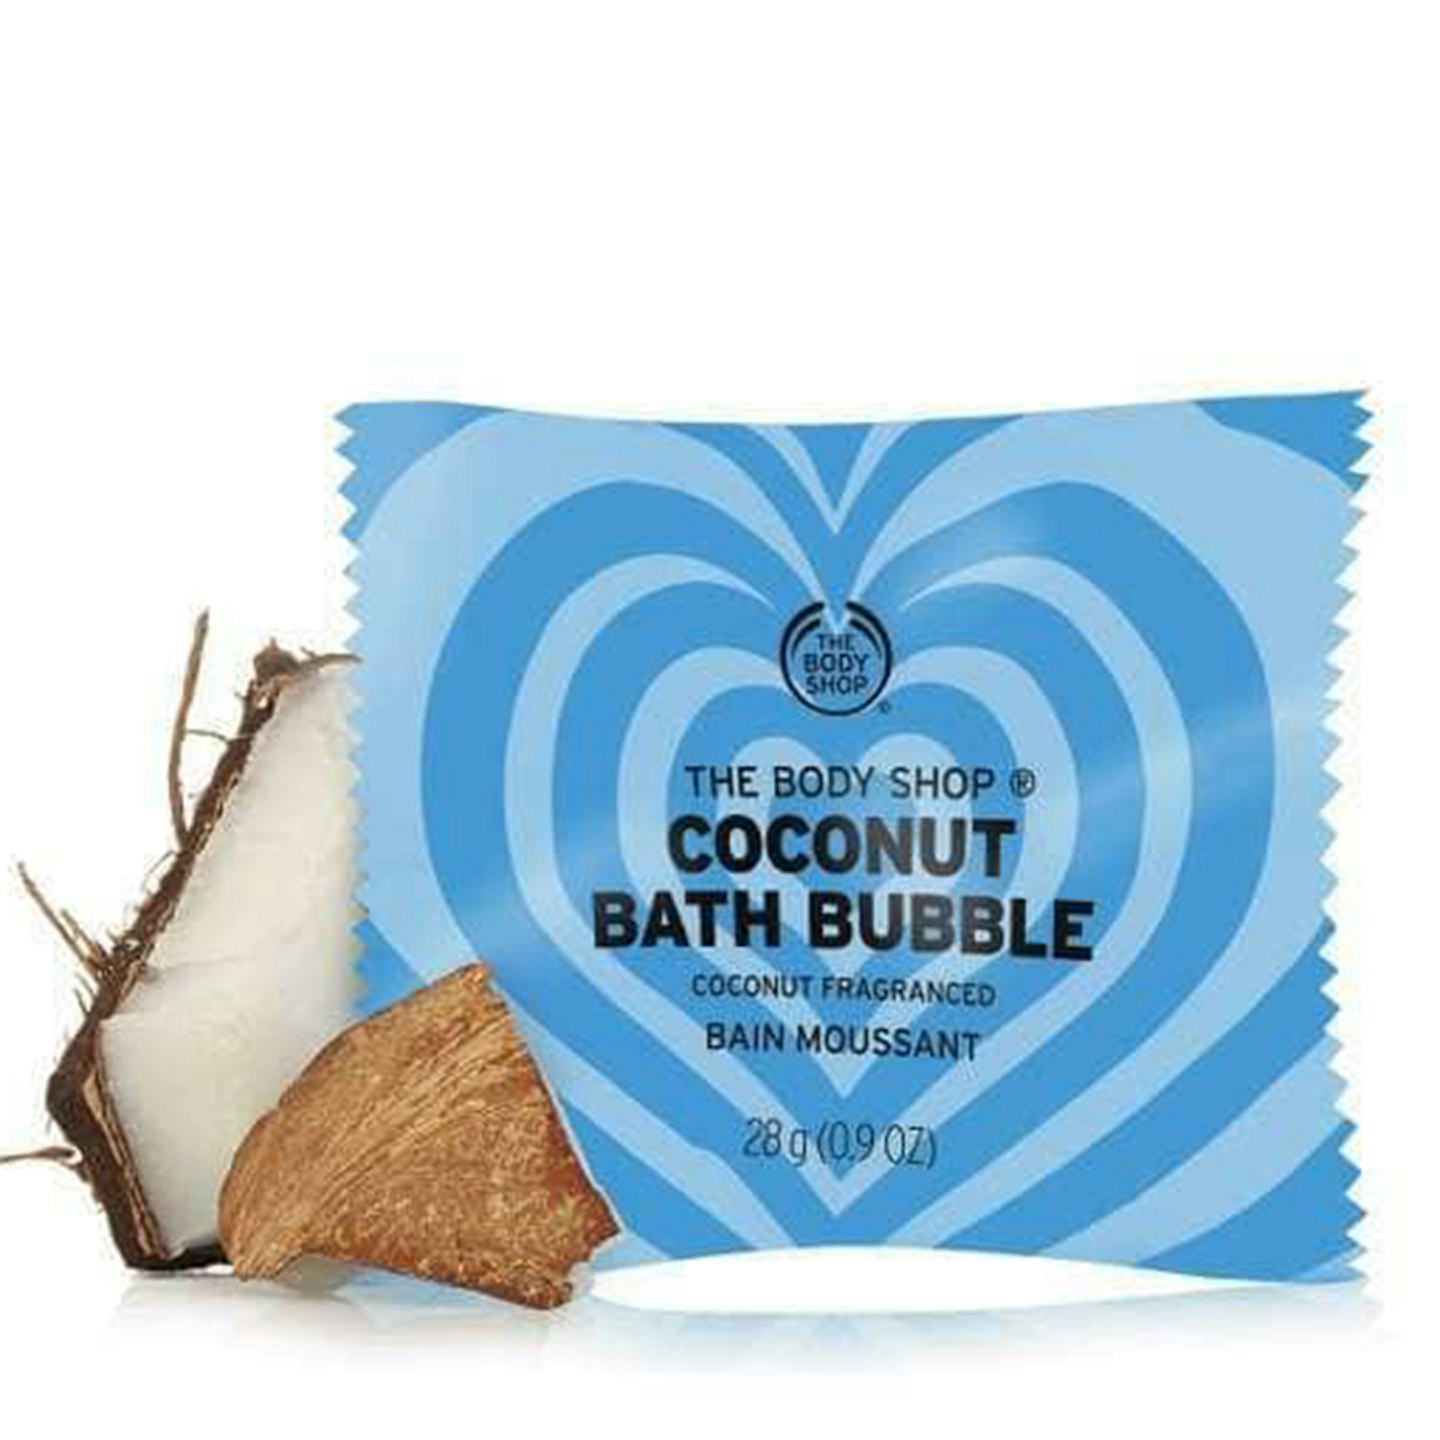 £9 Bath Products